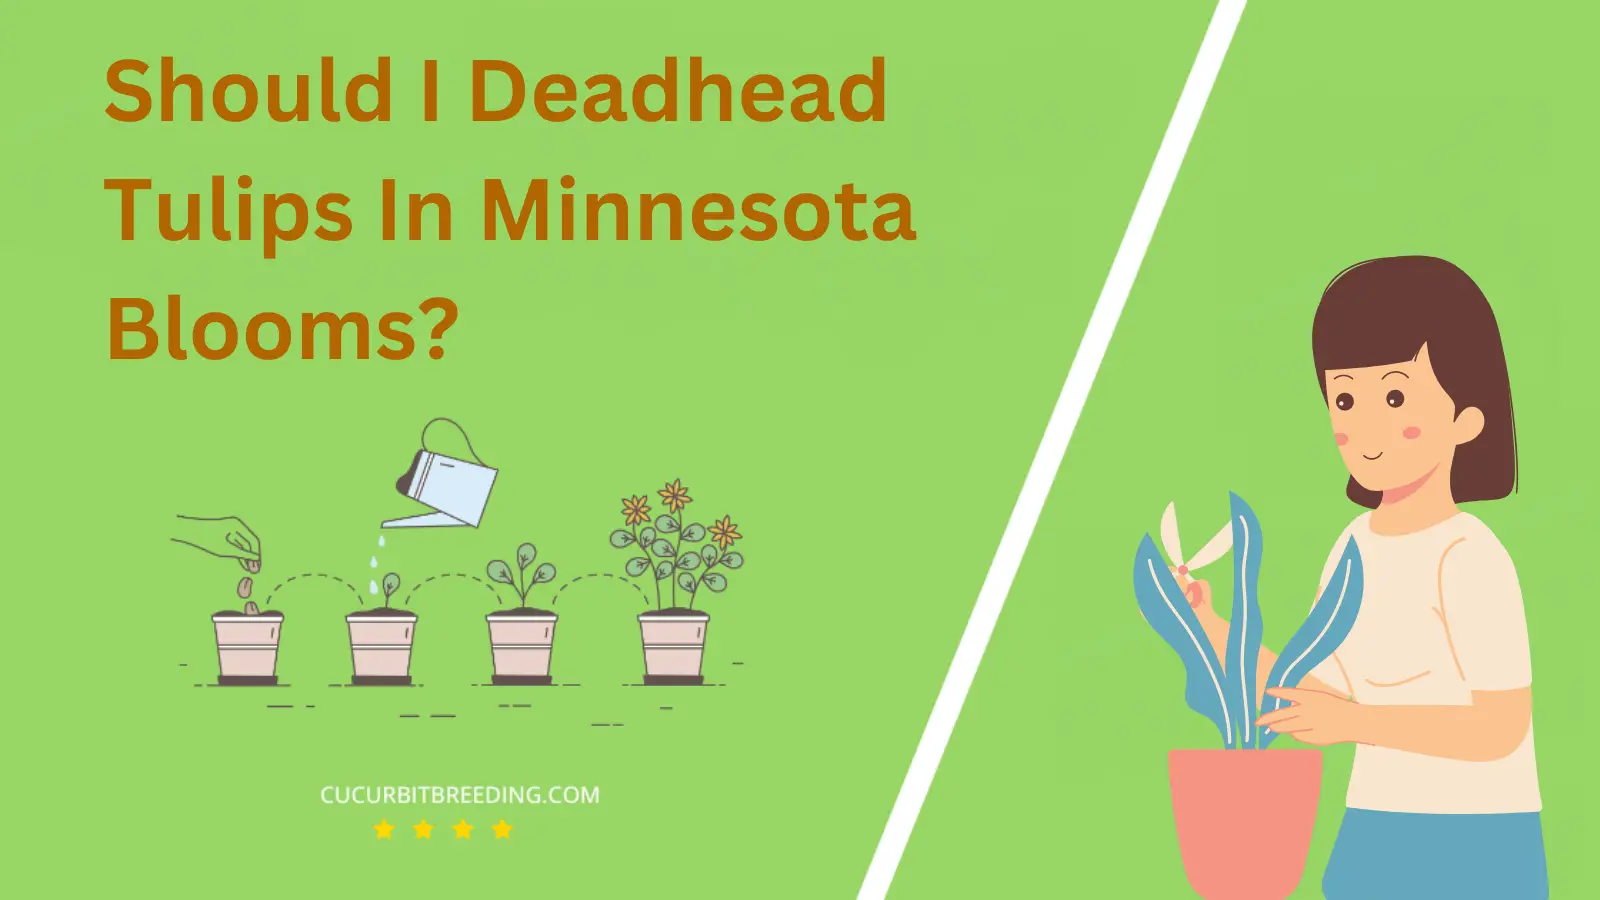 Should I Deadhead Tulips In Minnesota Blooms?